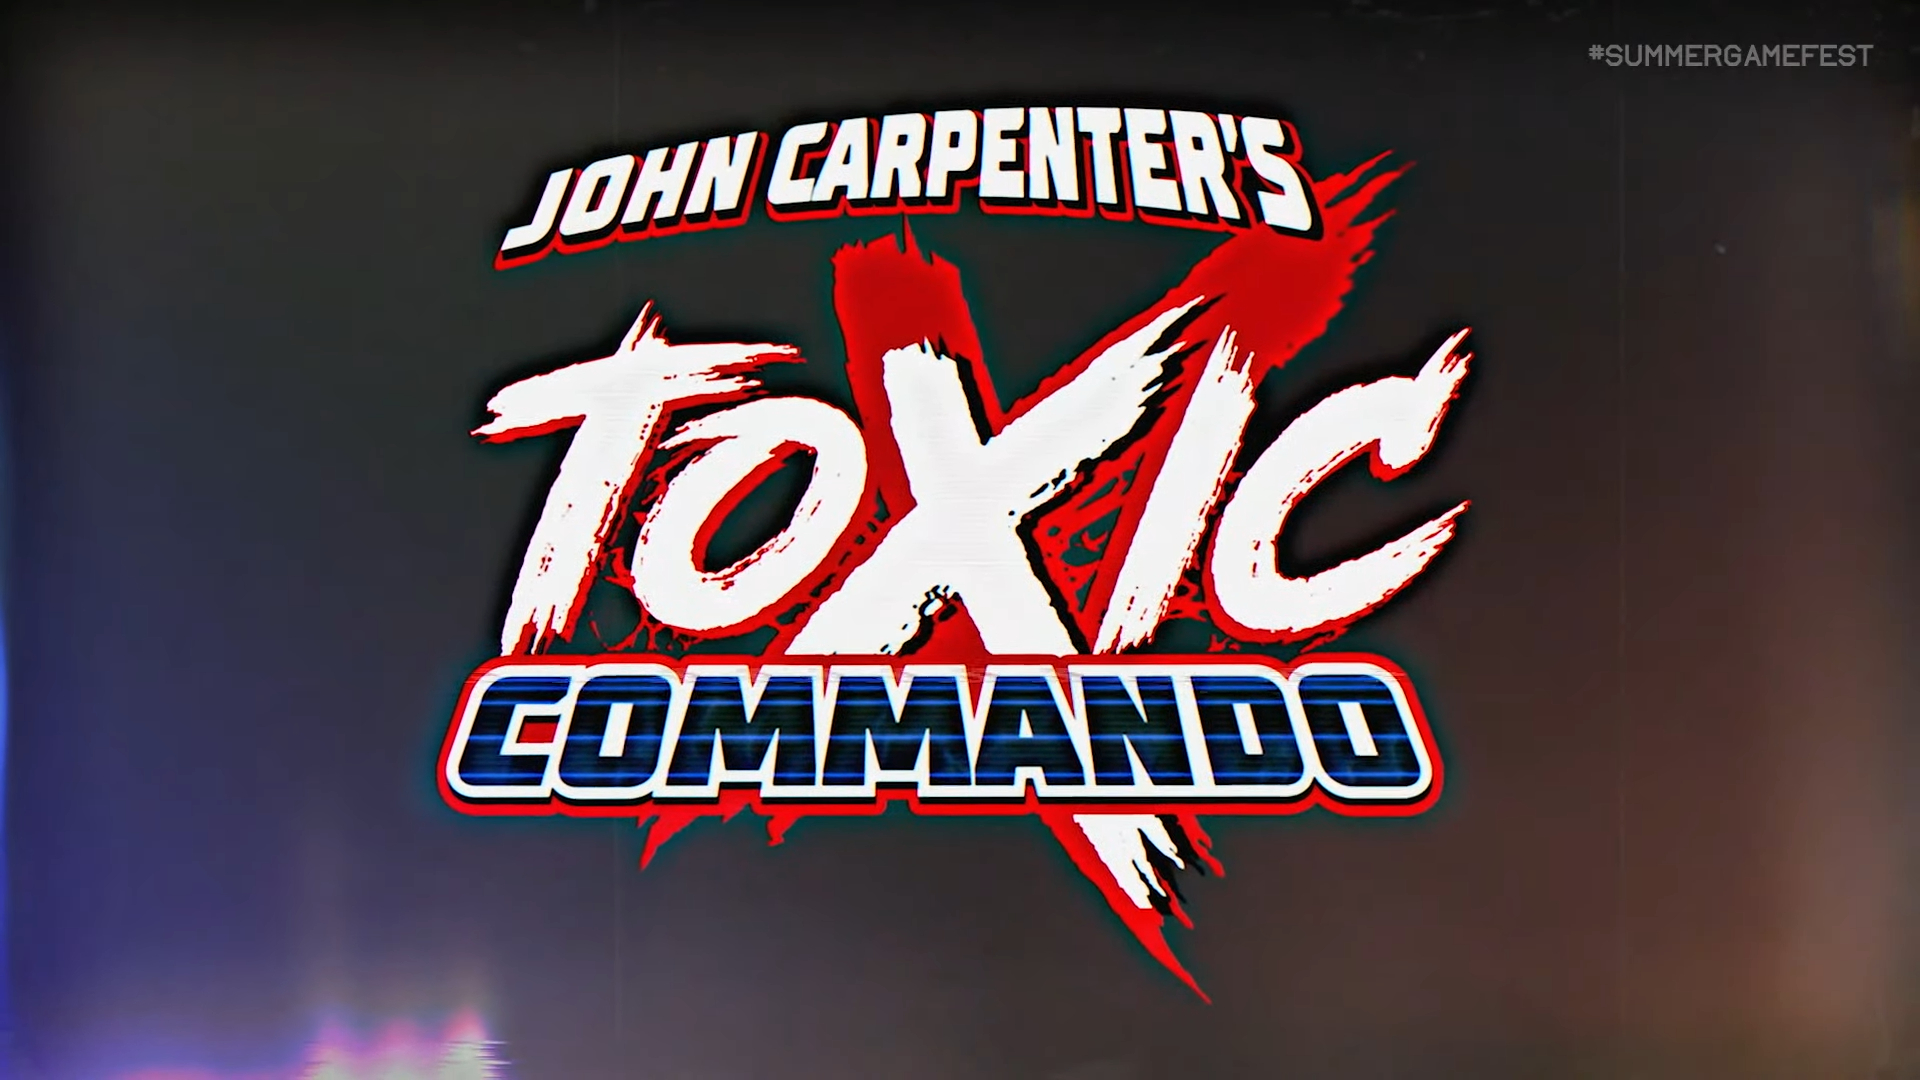 John Carpenter's Toxic Commando 